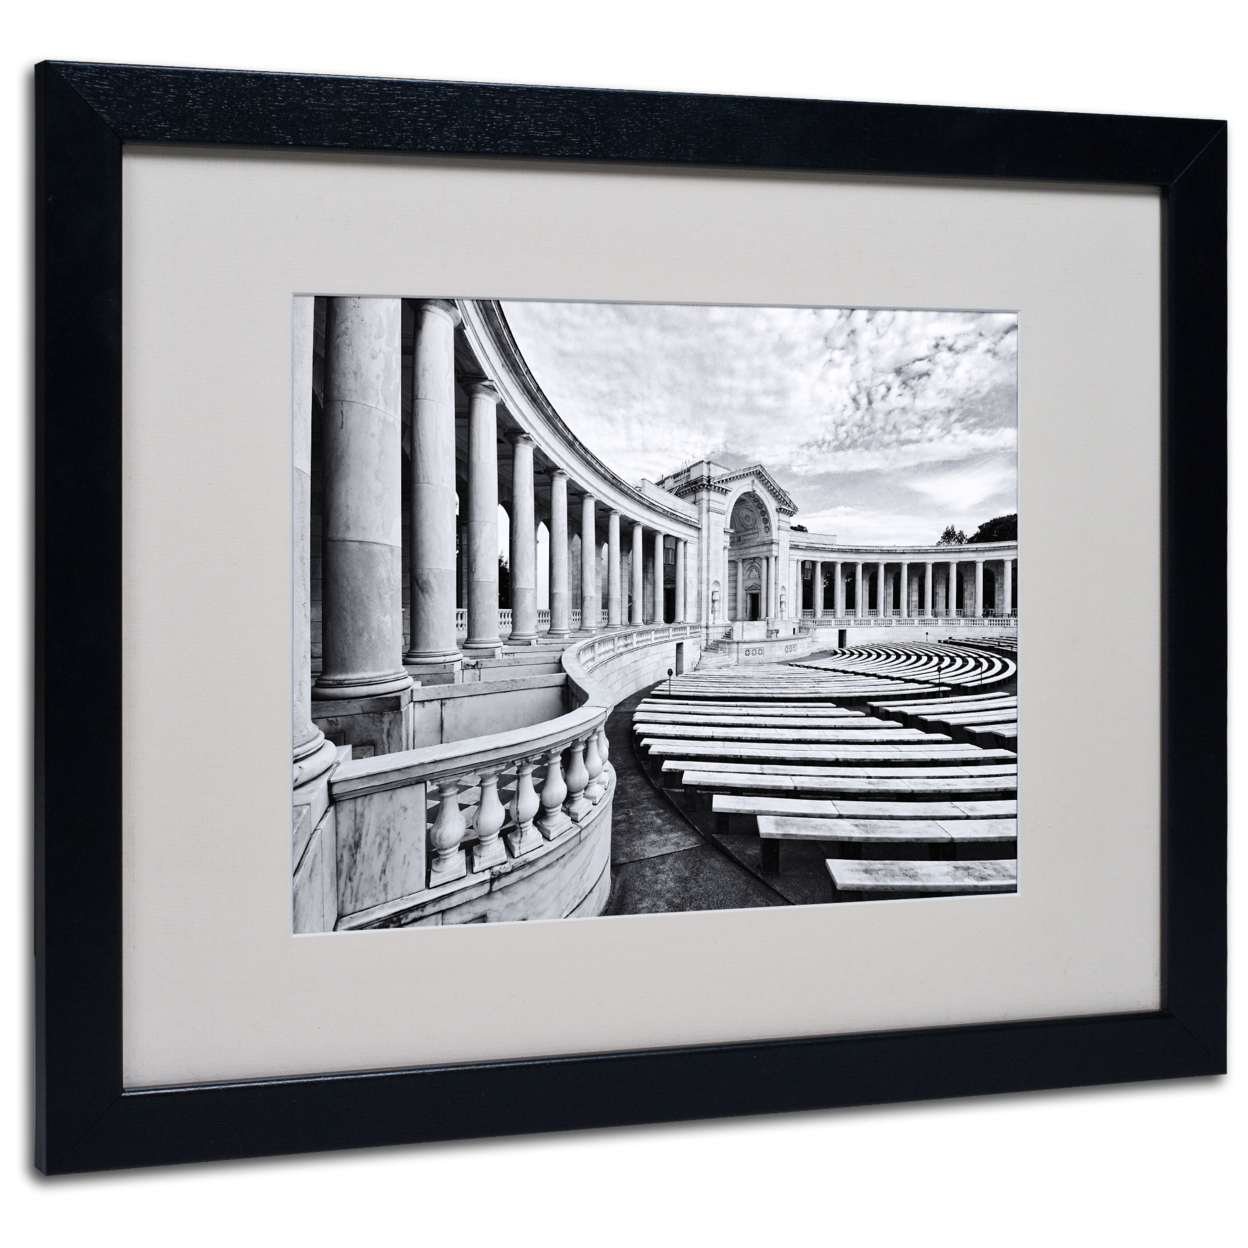 Gregory O'Hanlon 'Arlington Cemetery' Black Wooden Framed Art 18 X 22 Inches